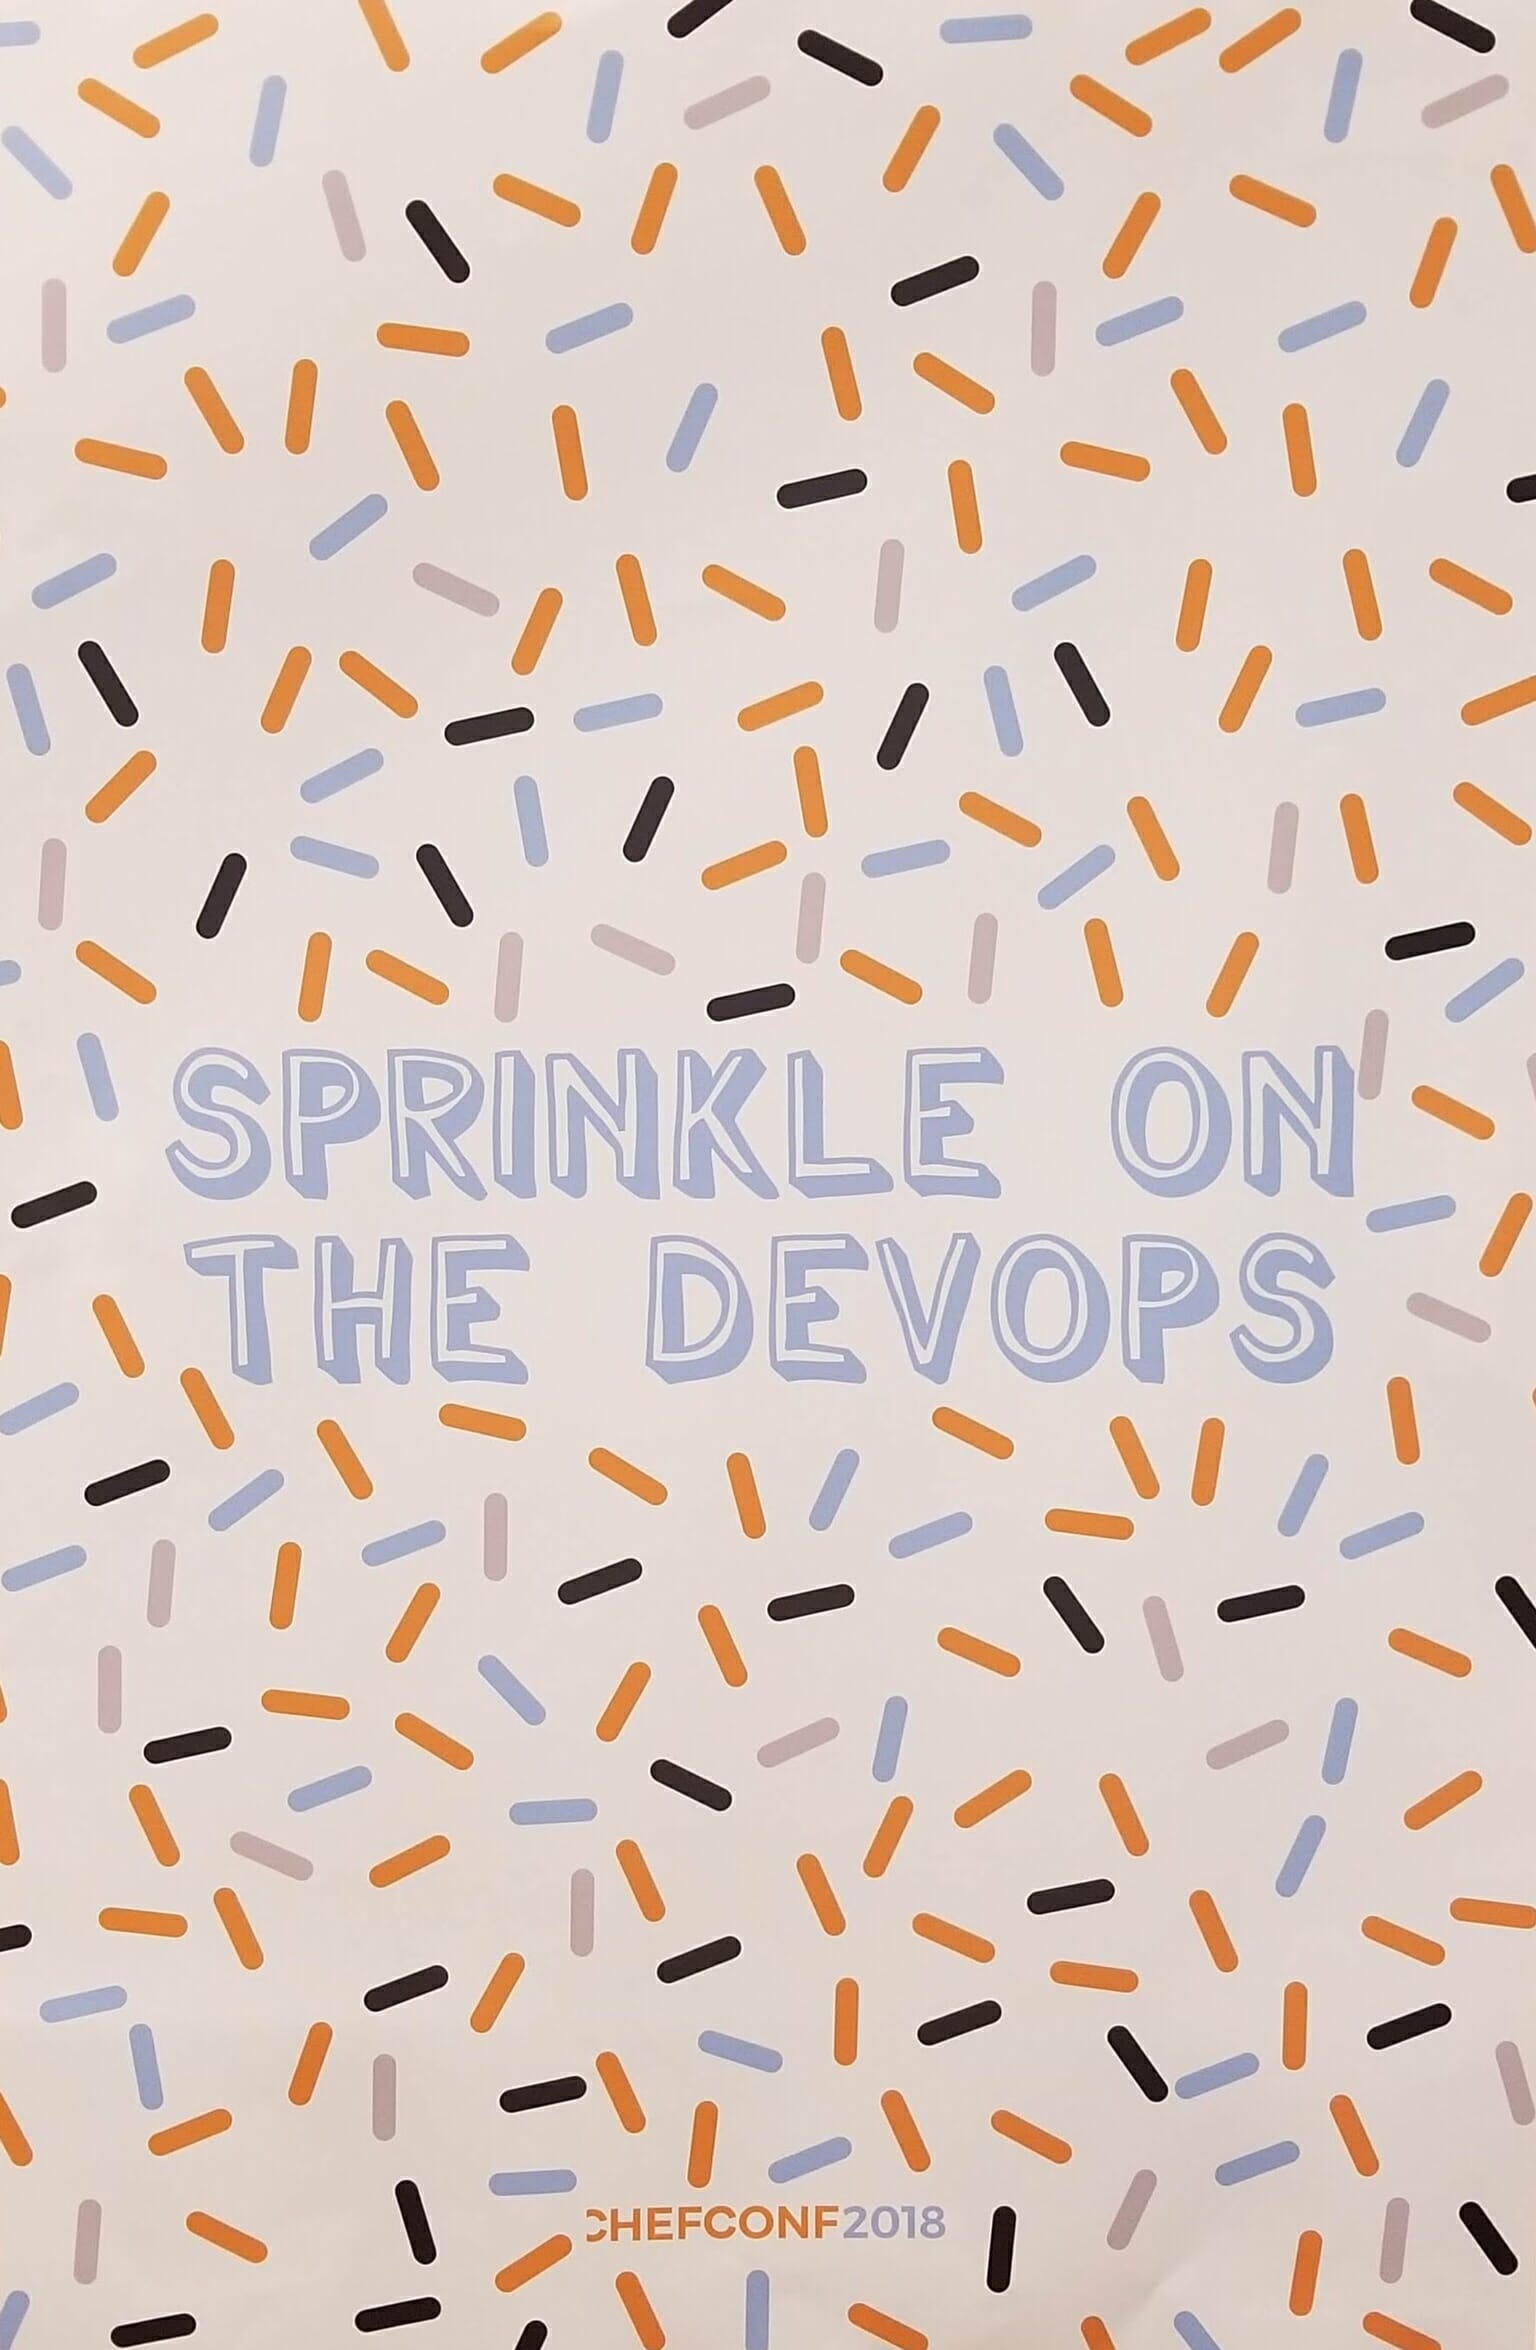 Sprinkle on the devops